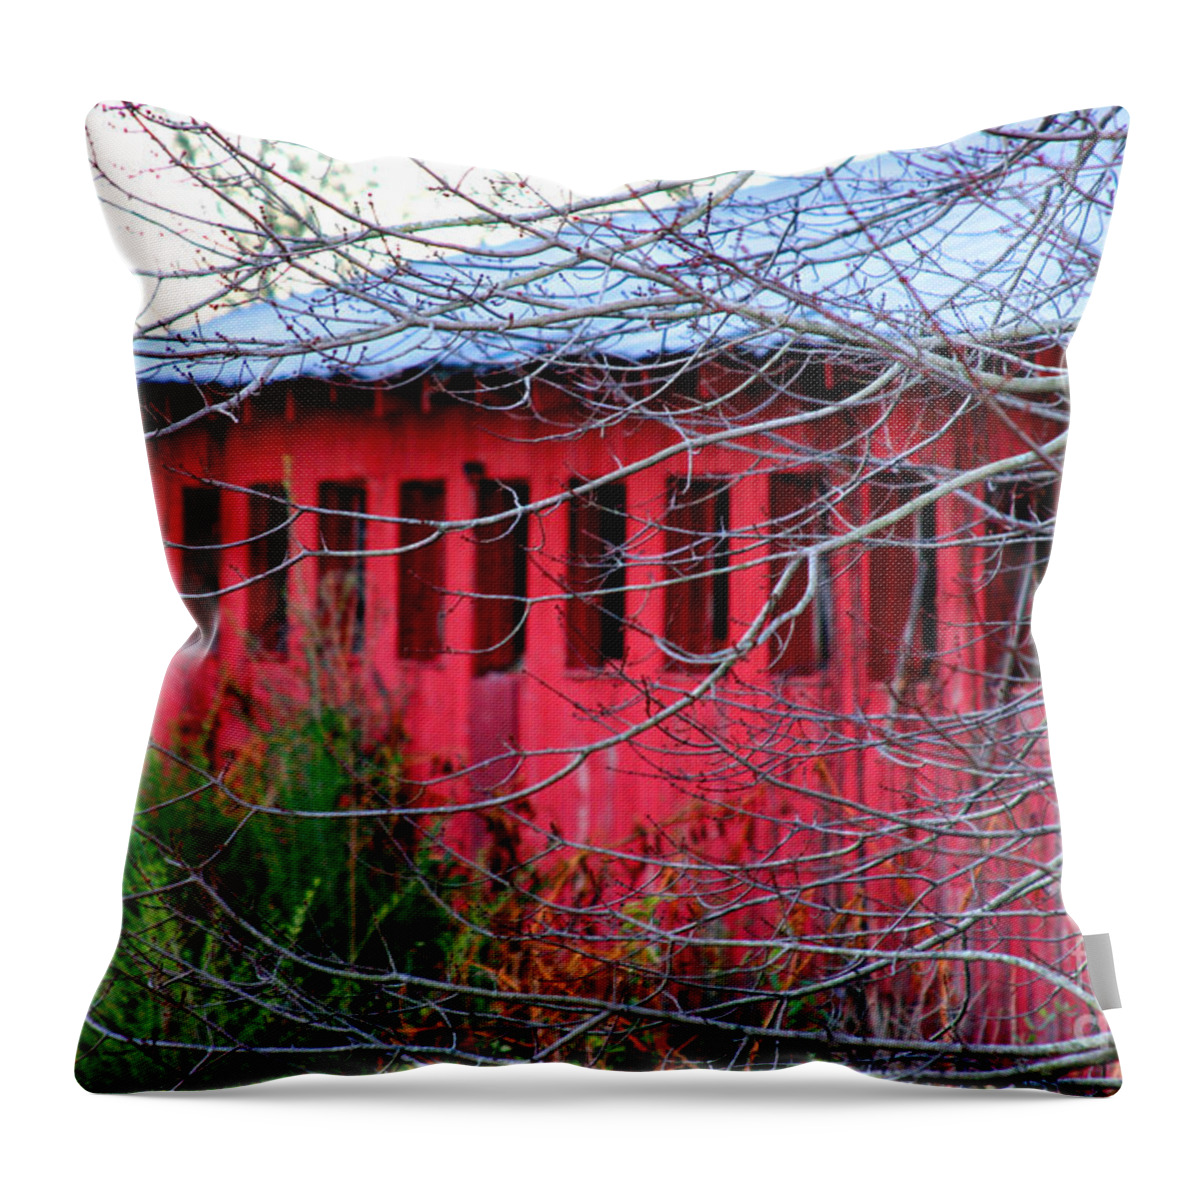 Barn Throw Pillow featuring the photograph Barn of Red by Diana Sainz by Diana Raquel Sainz